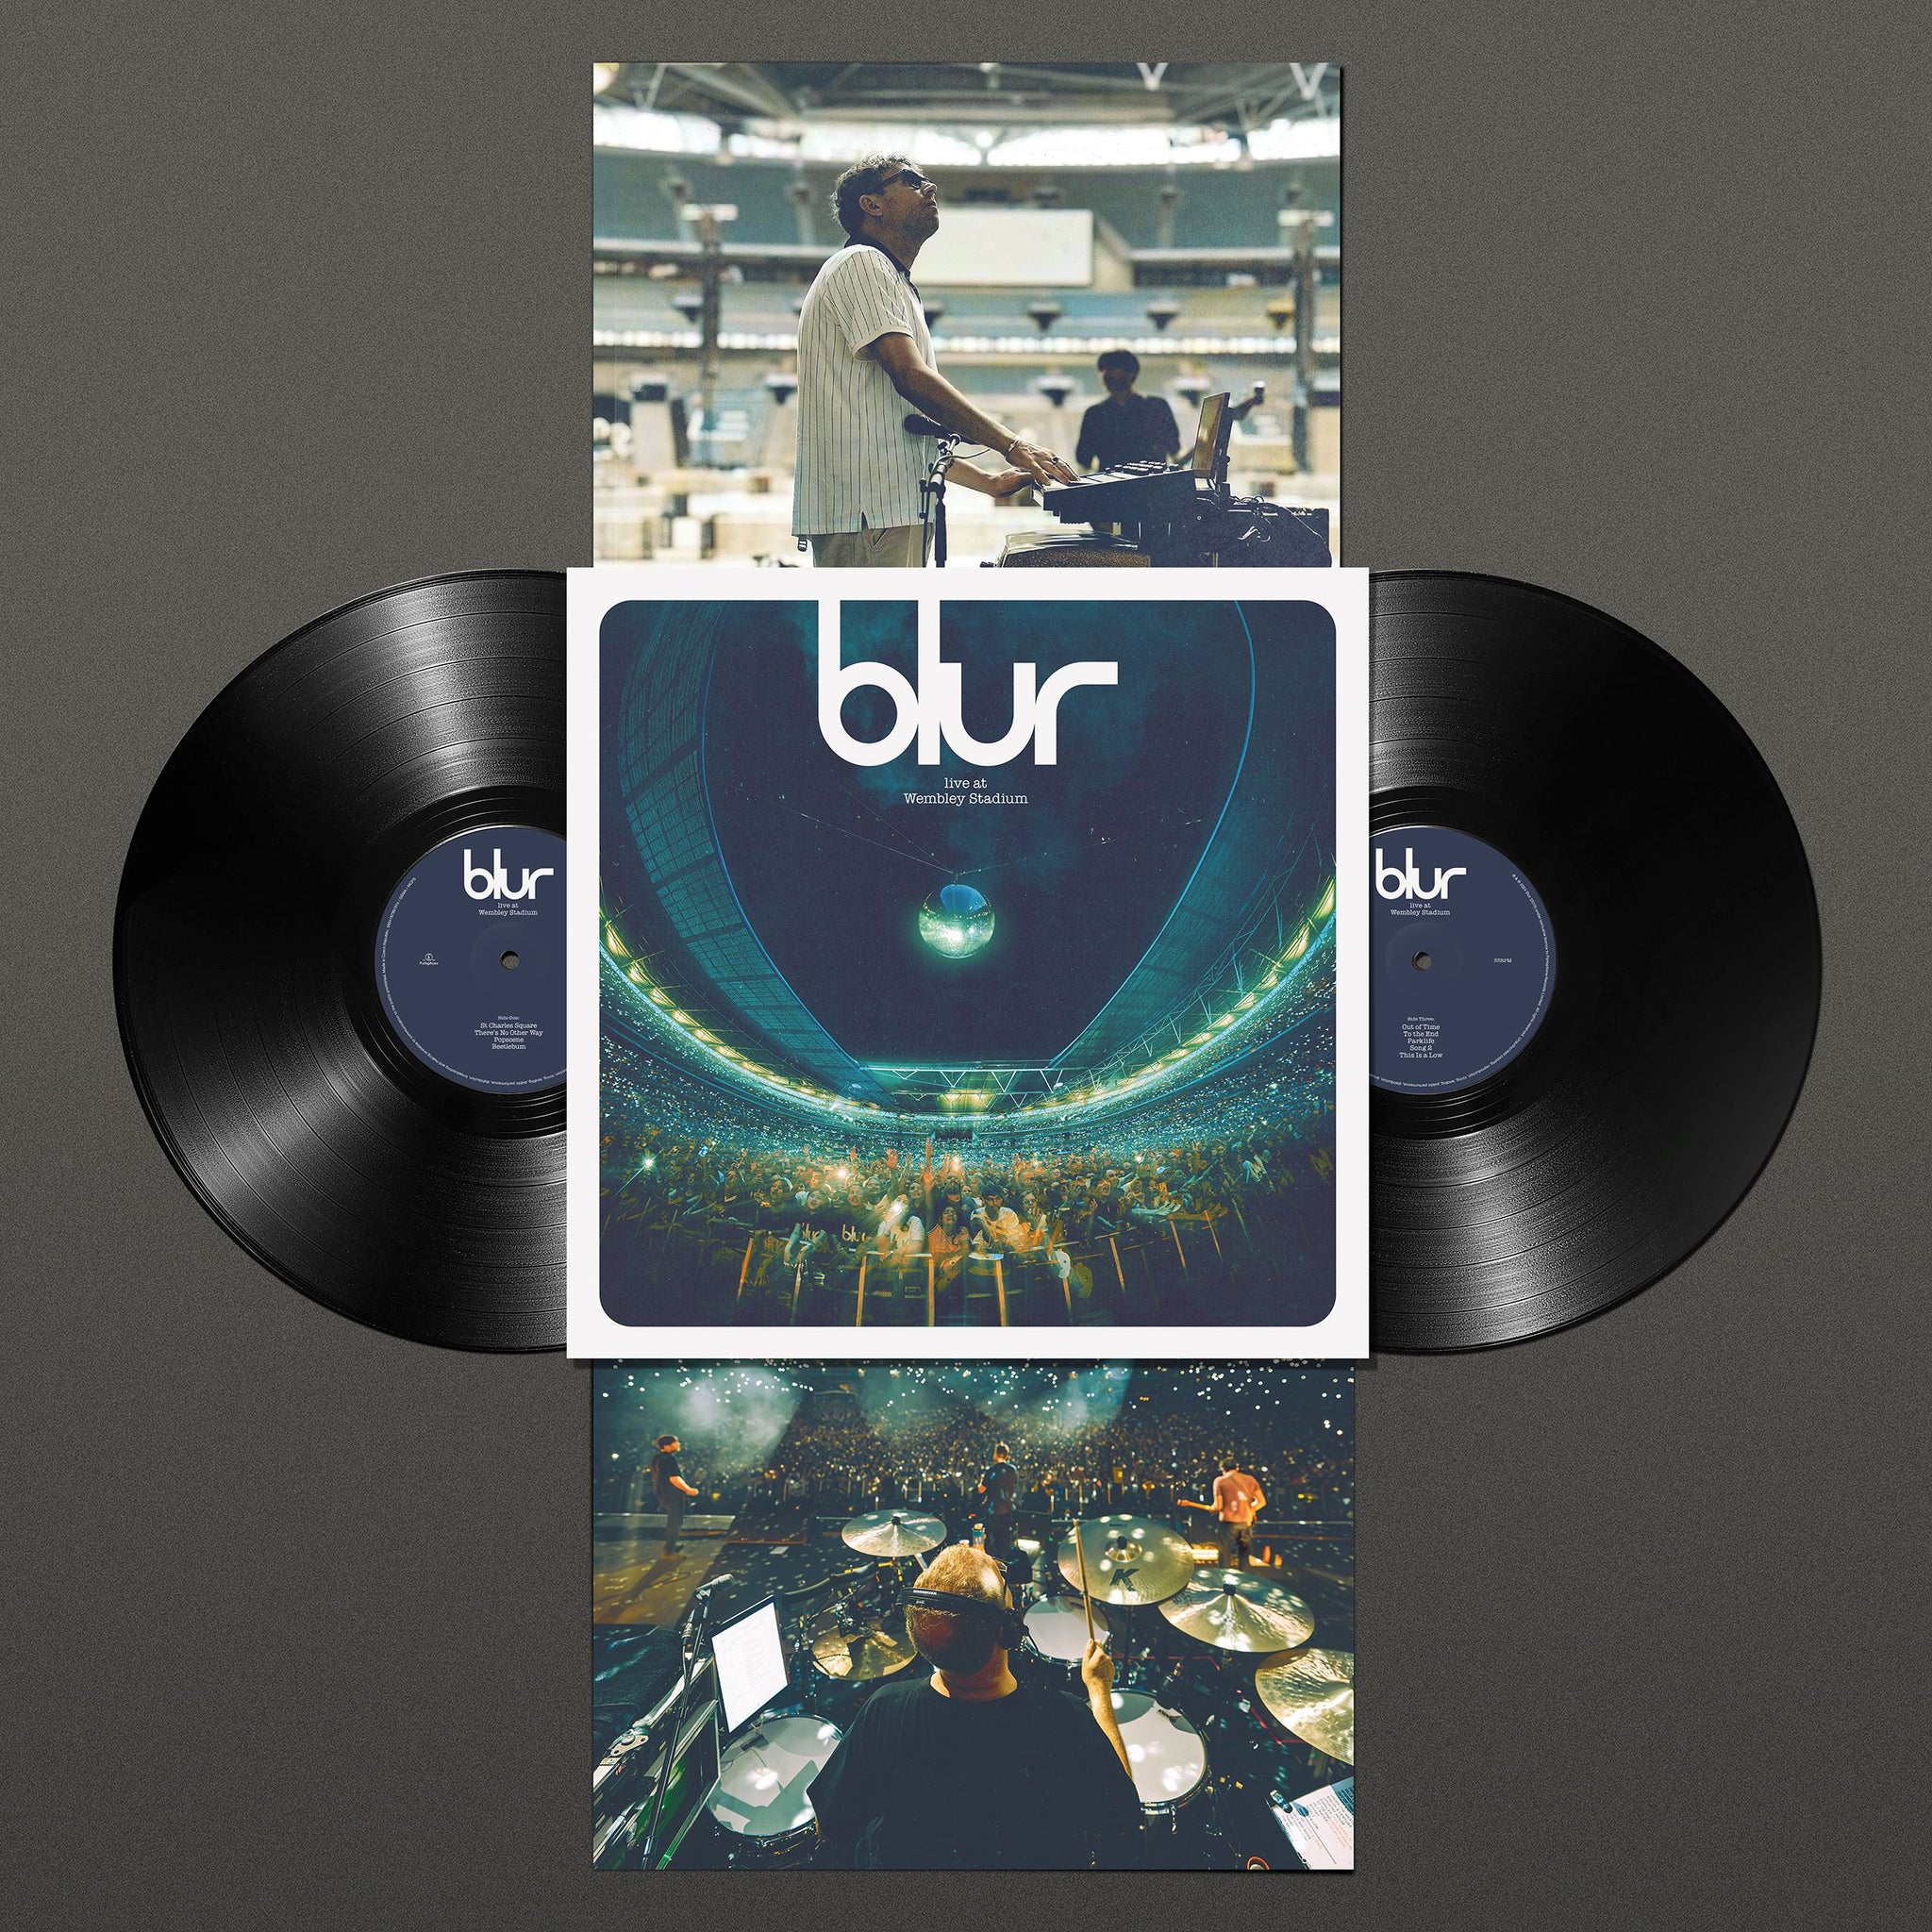 Blur "Live At Wembley Stadium" 2x12" Black Vinyl - PRE-ORDER